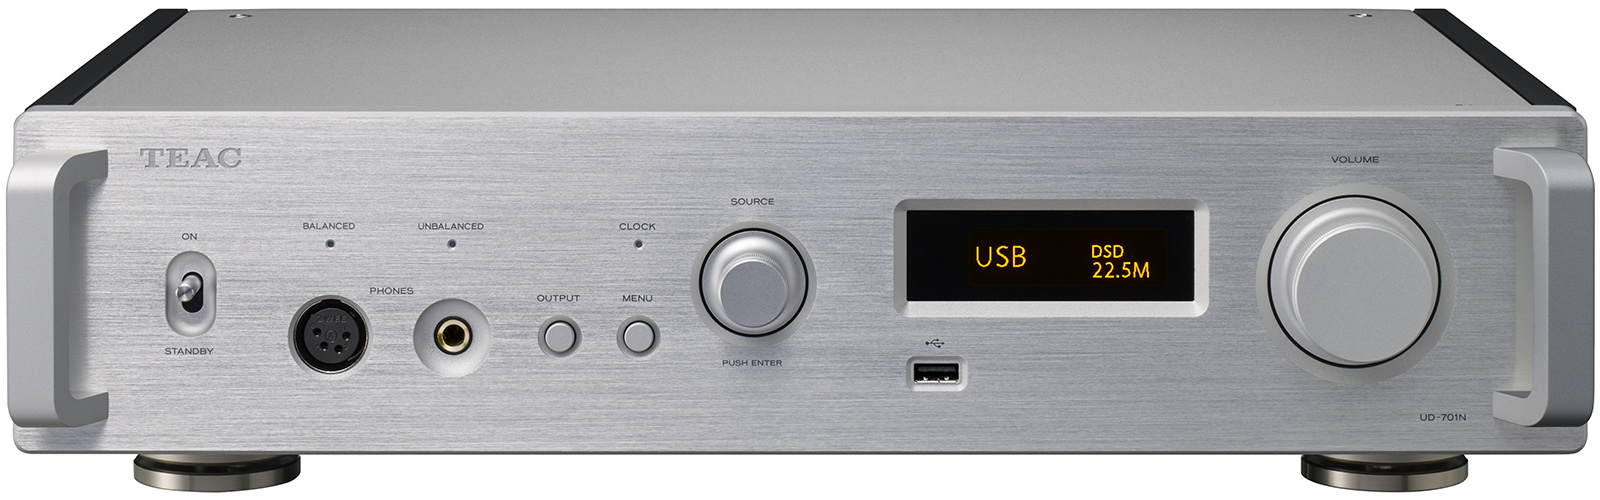 Сетевые аудио проигрыватели Teac UD-701N silver сетевые аудио проигрыватели avm mp 6 3 silver